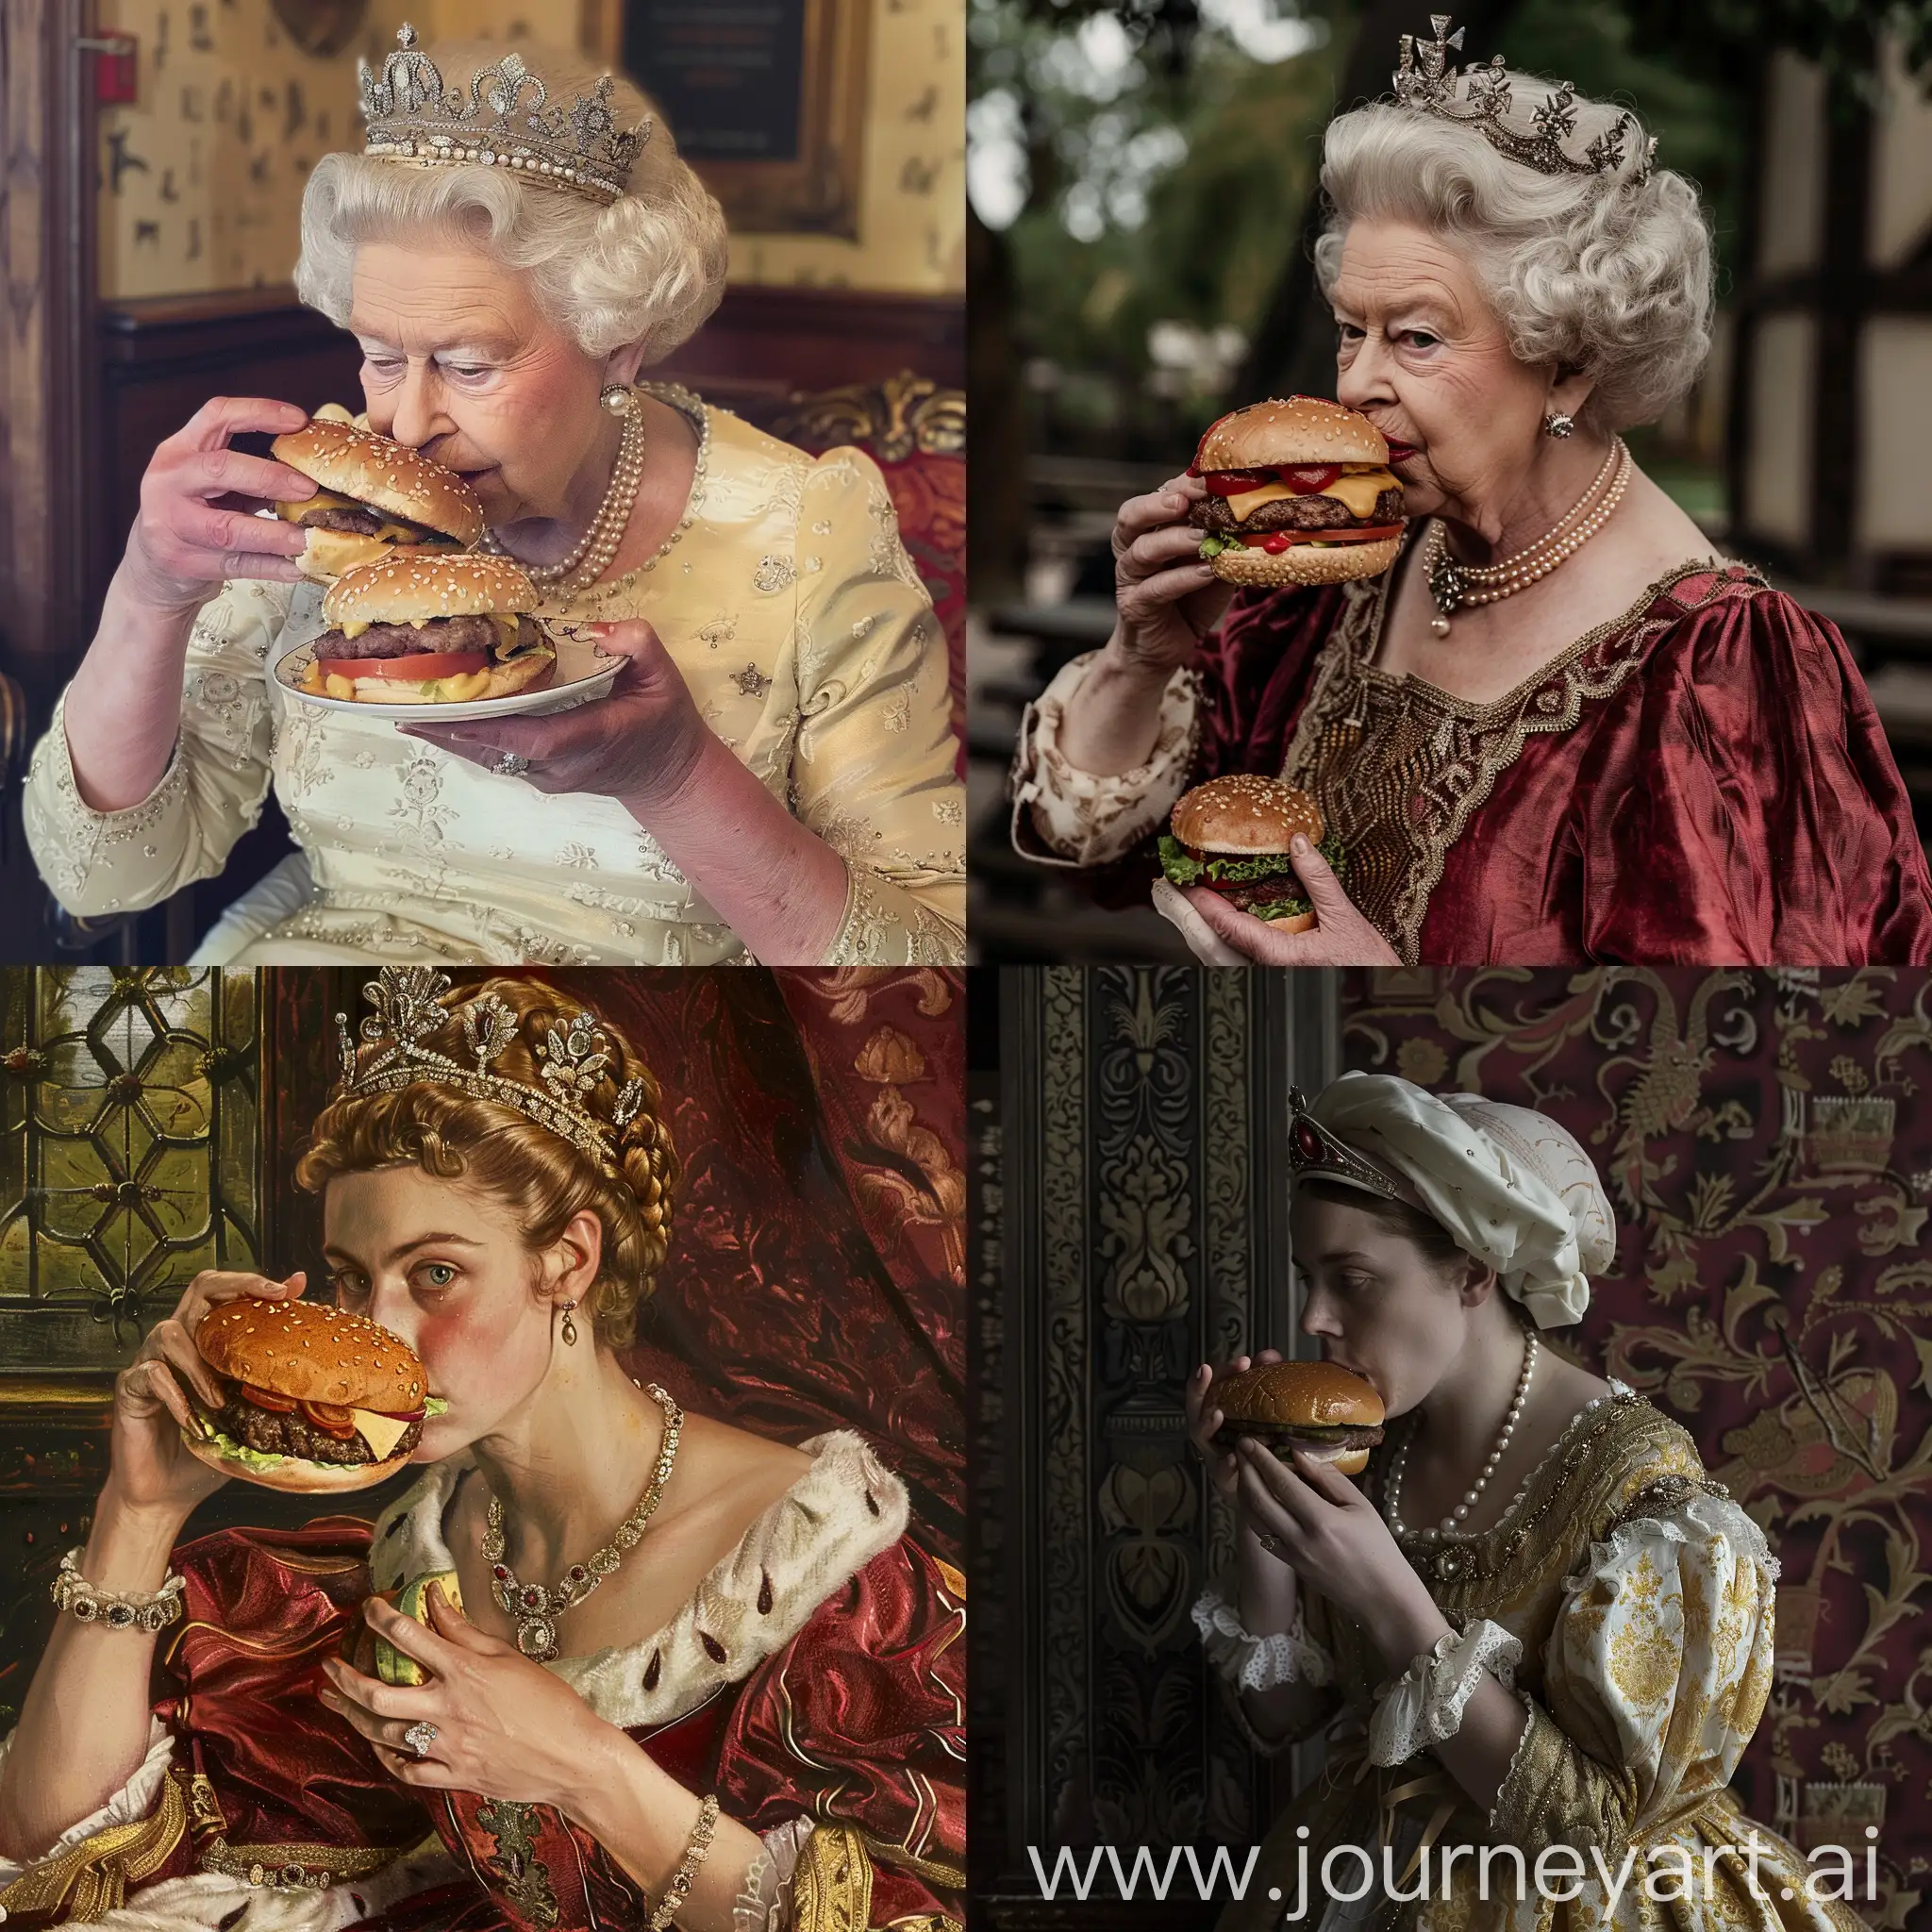 Queen-Isabel-Enjoying-a-Burger-in-Royal-Splendor